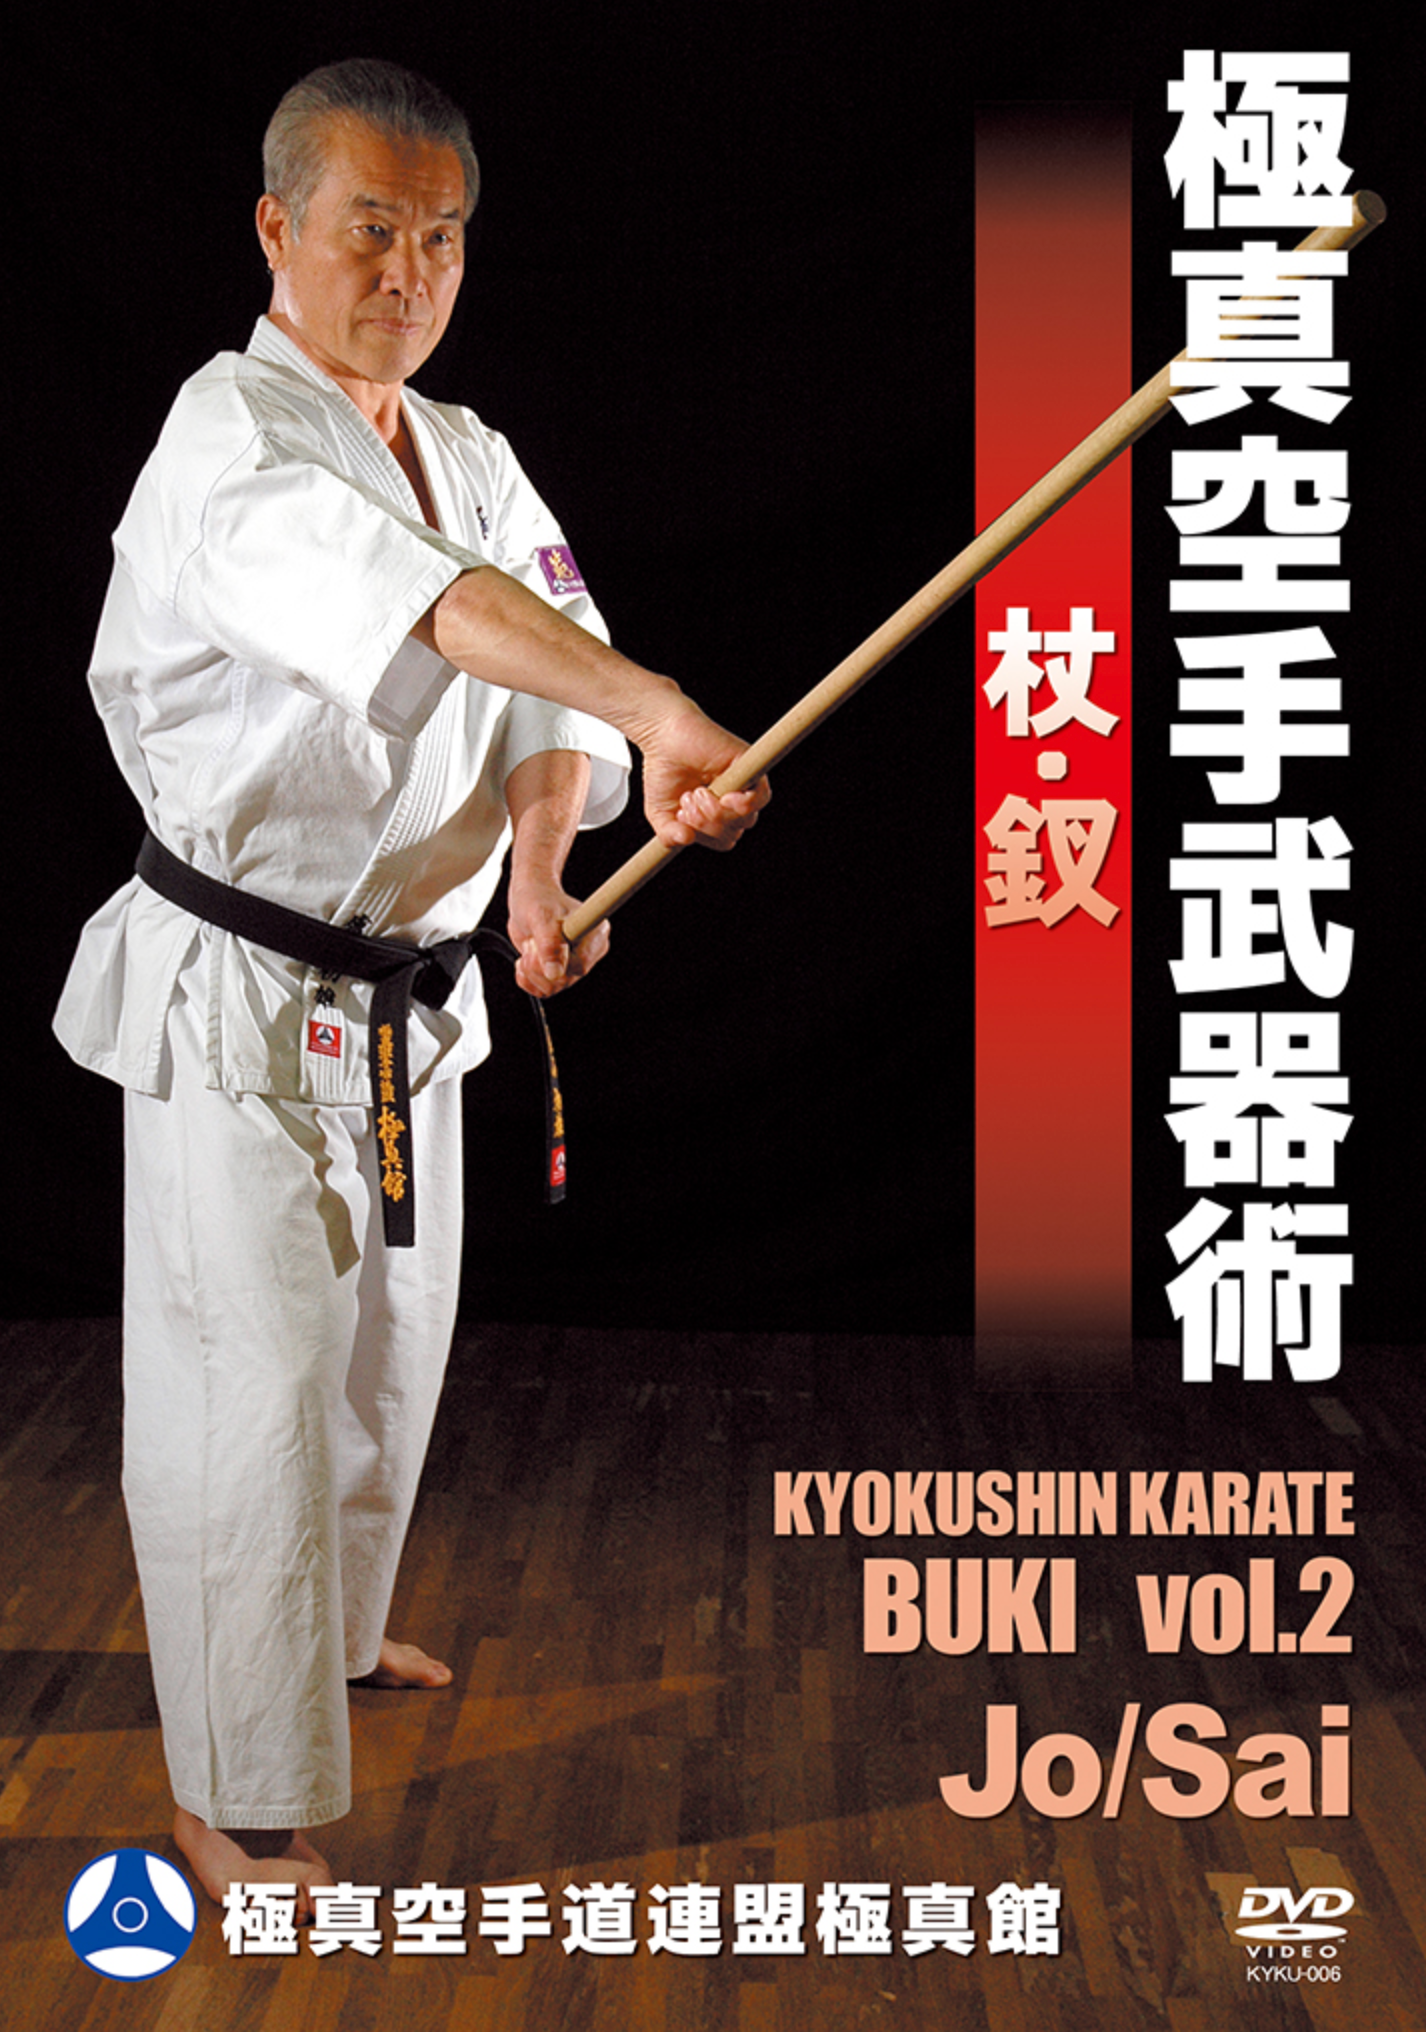 Kyokushin Karate Buki DVD Vol 2: Jo & Sai - Budovideos Inc